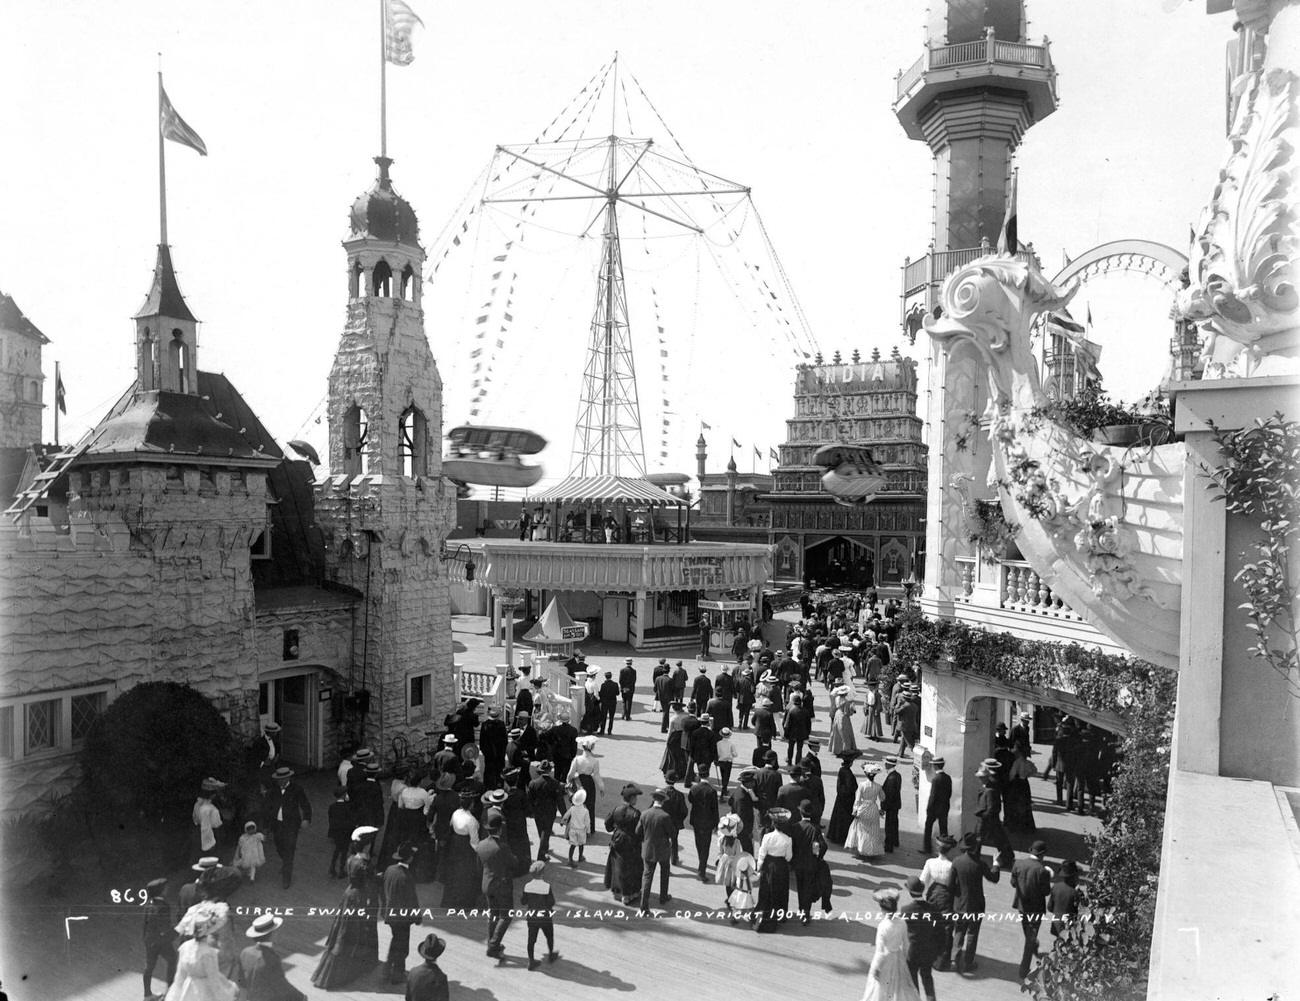 Luna Park'S Circle Swing, 1904